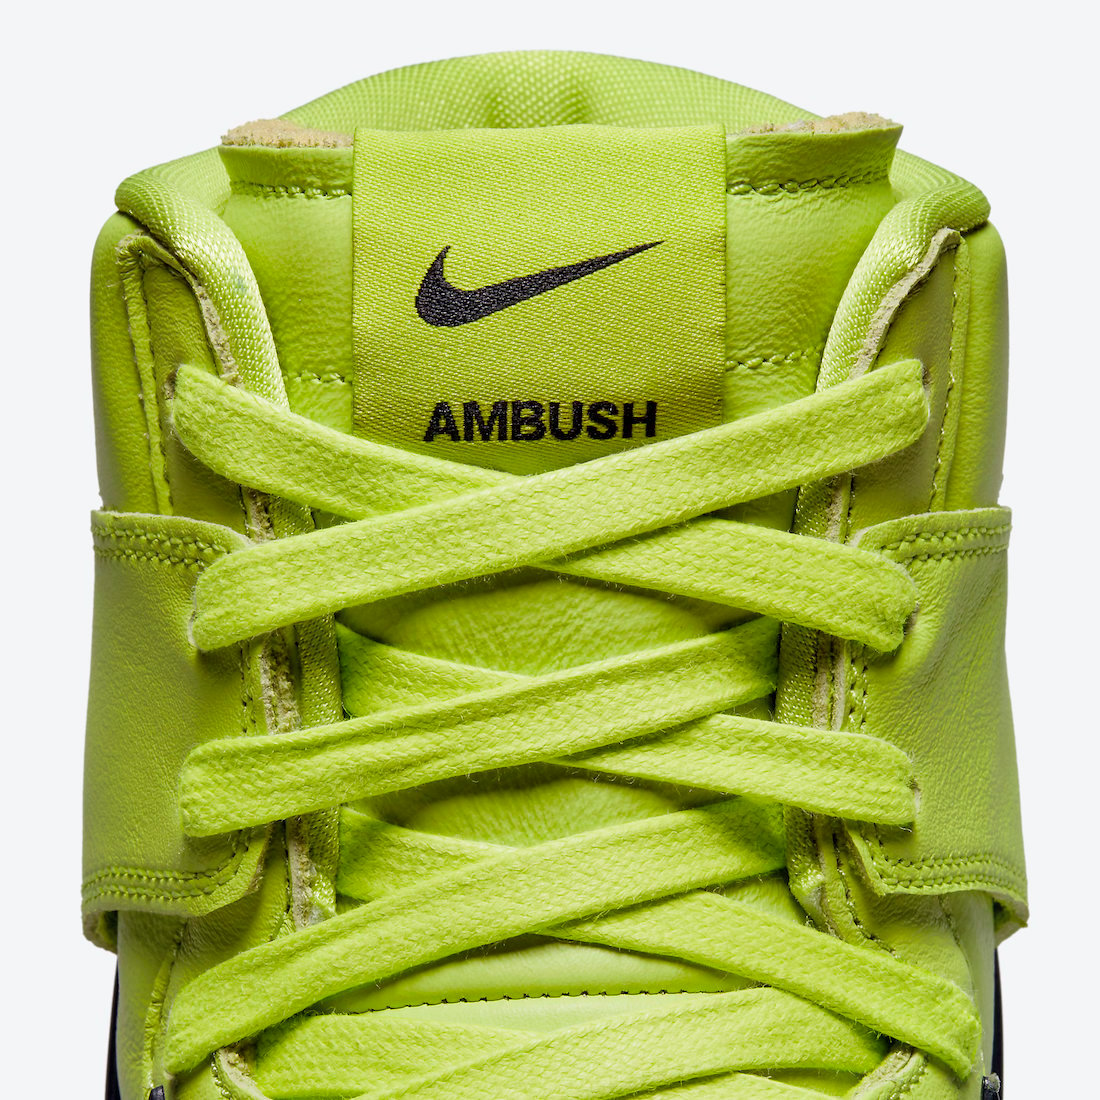 Ambush Nike Dunk High Flash Lime CU7544-300 Release Date